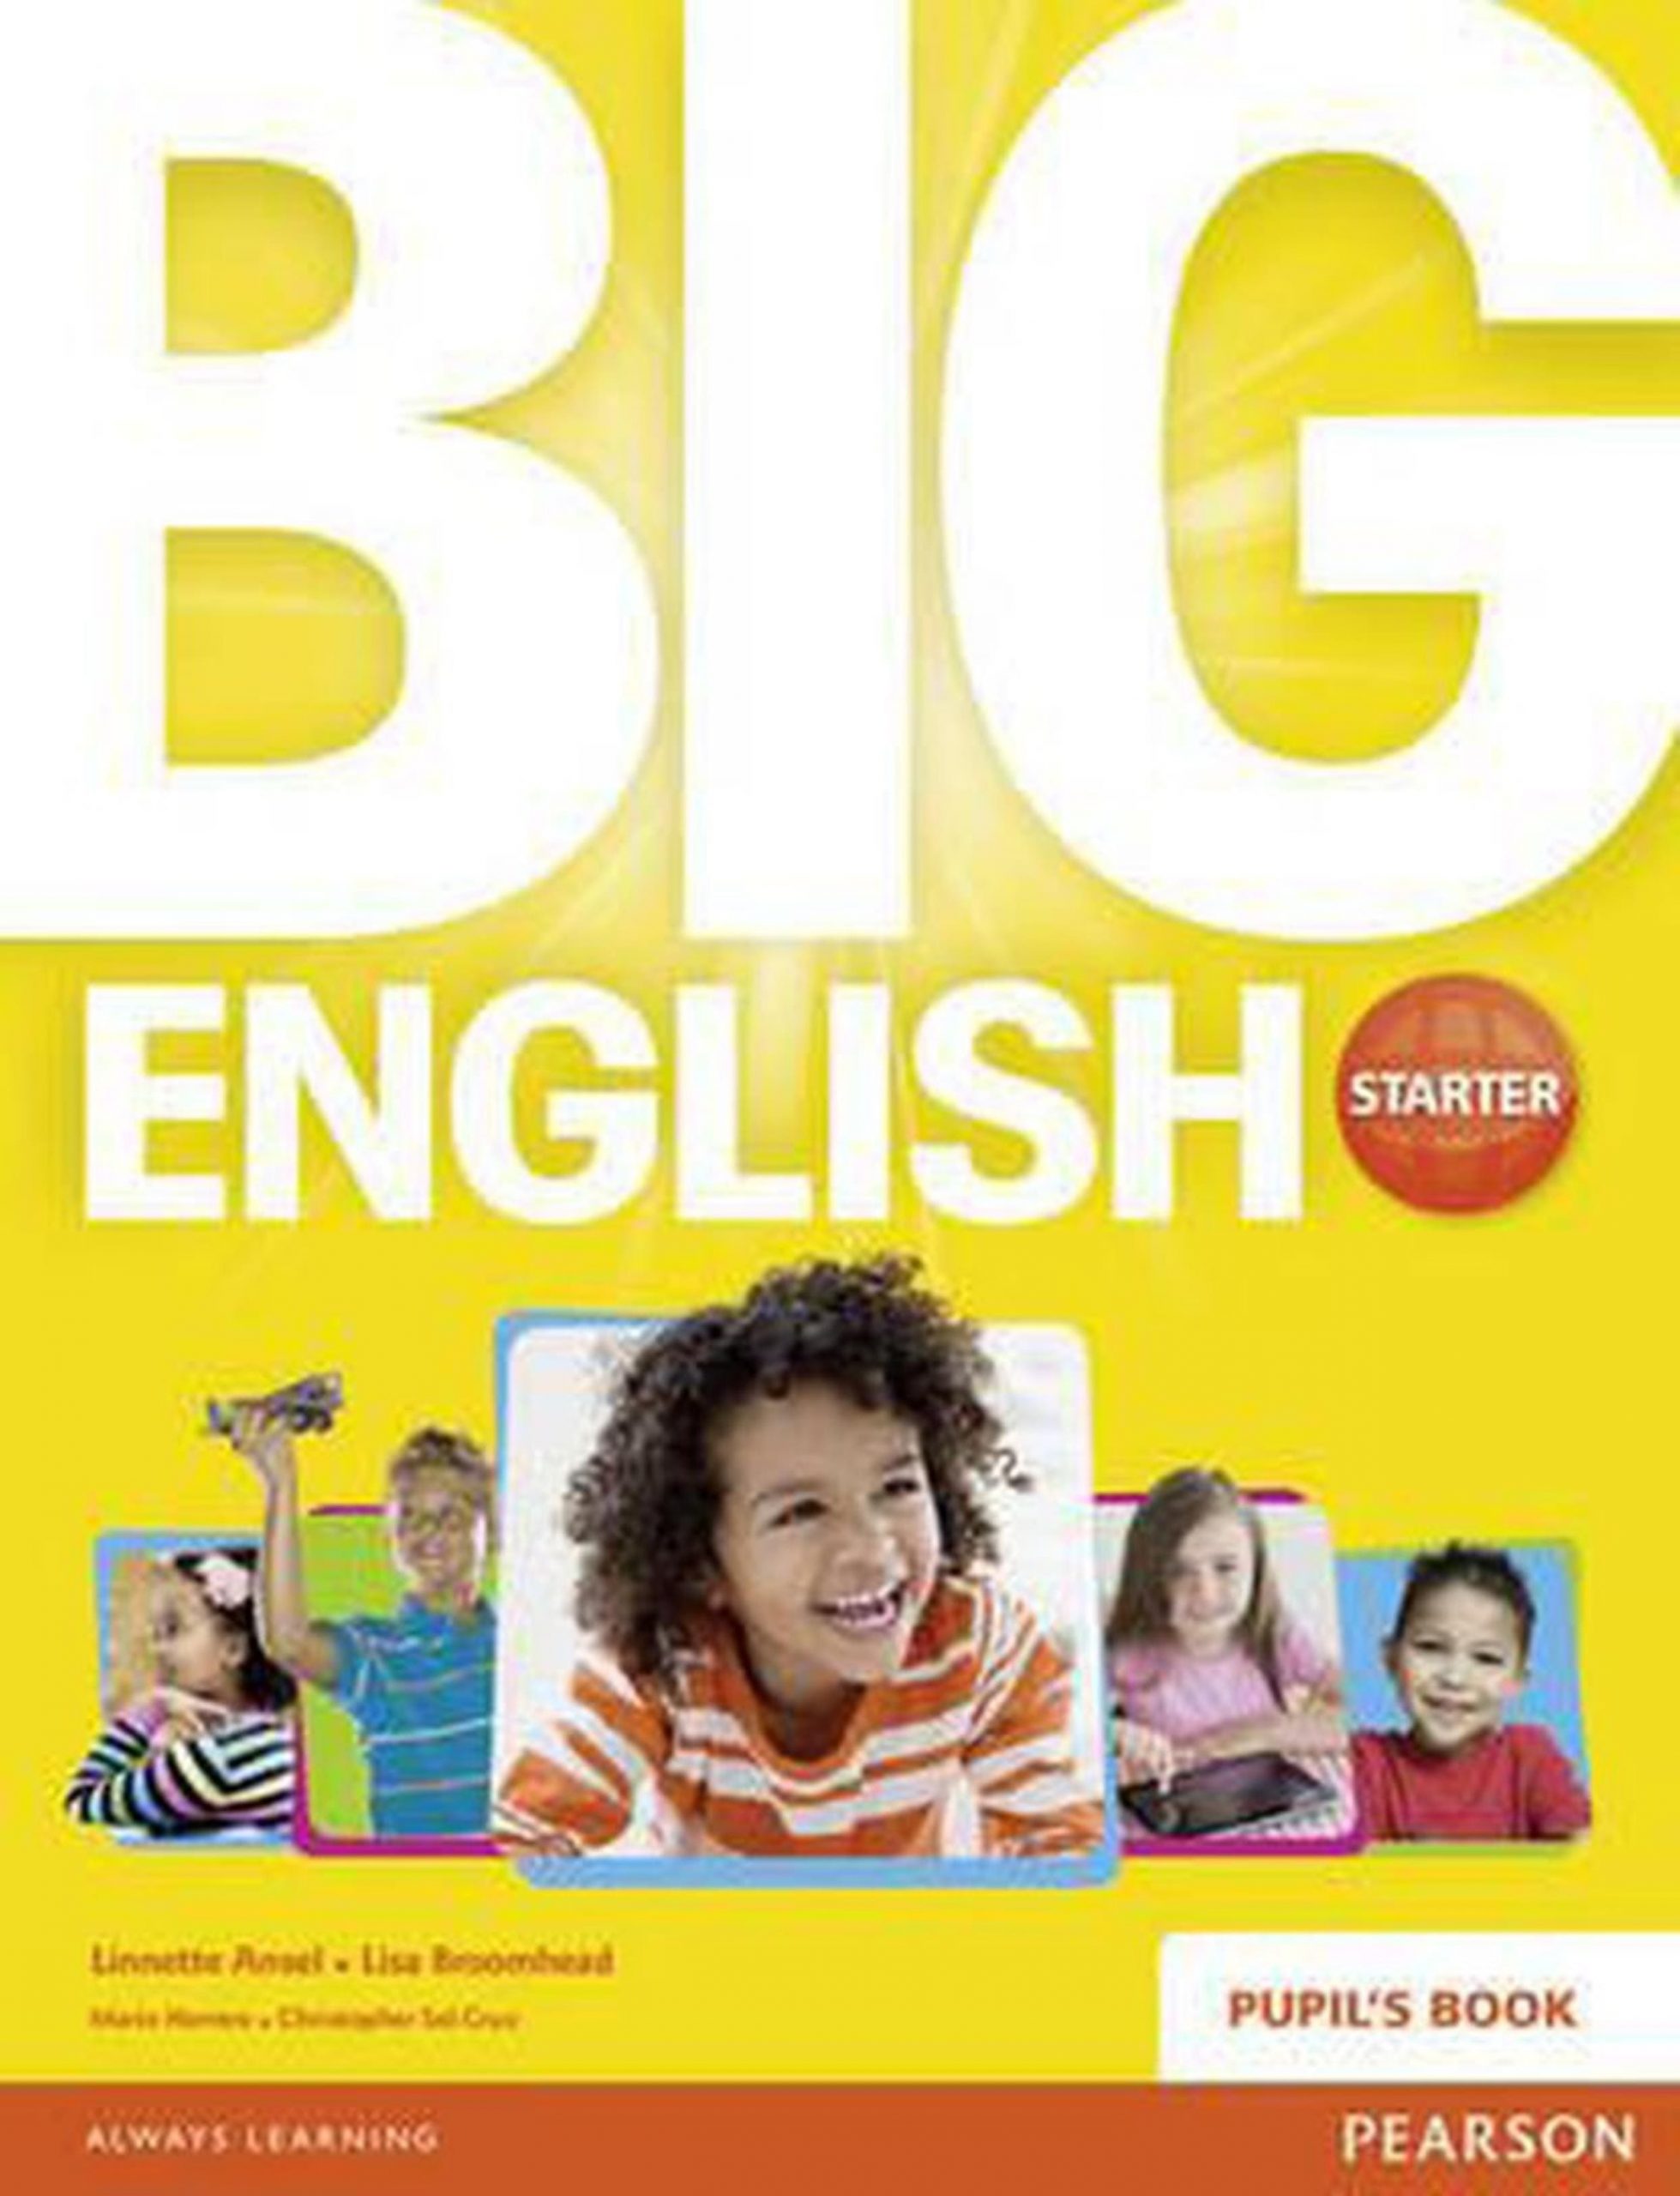 Big English Starter Pupil's Book Learn English - المعلمة أسماء